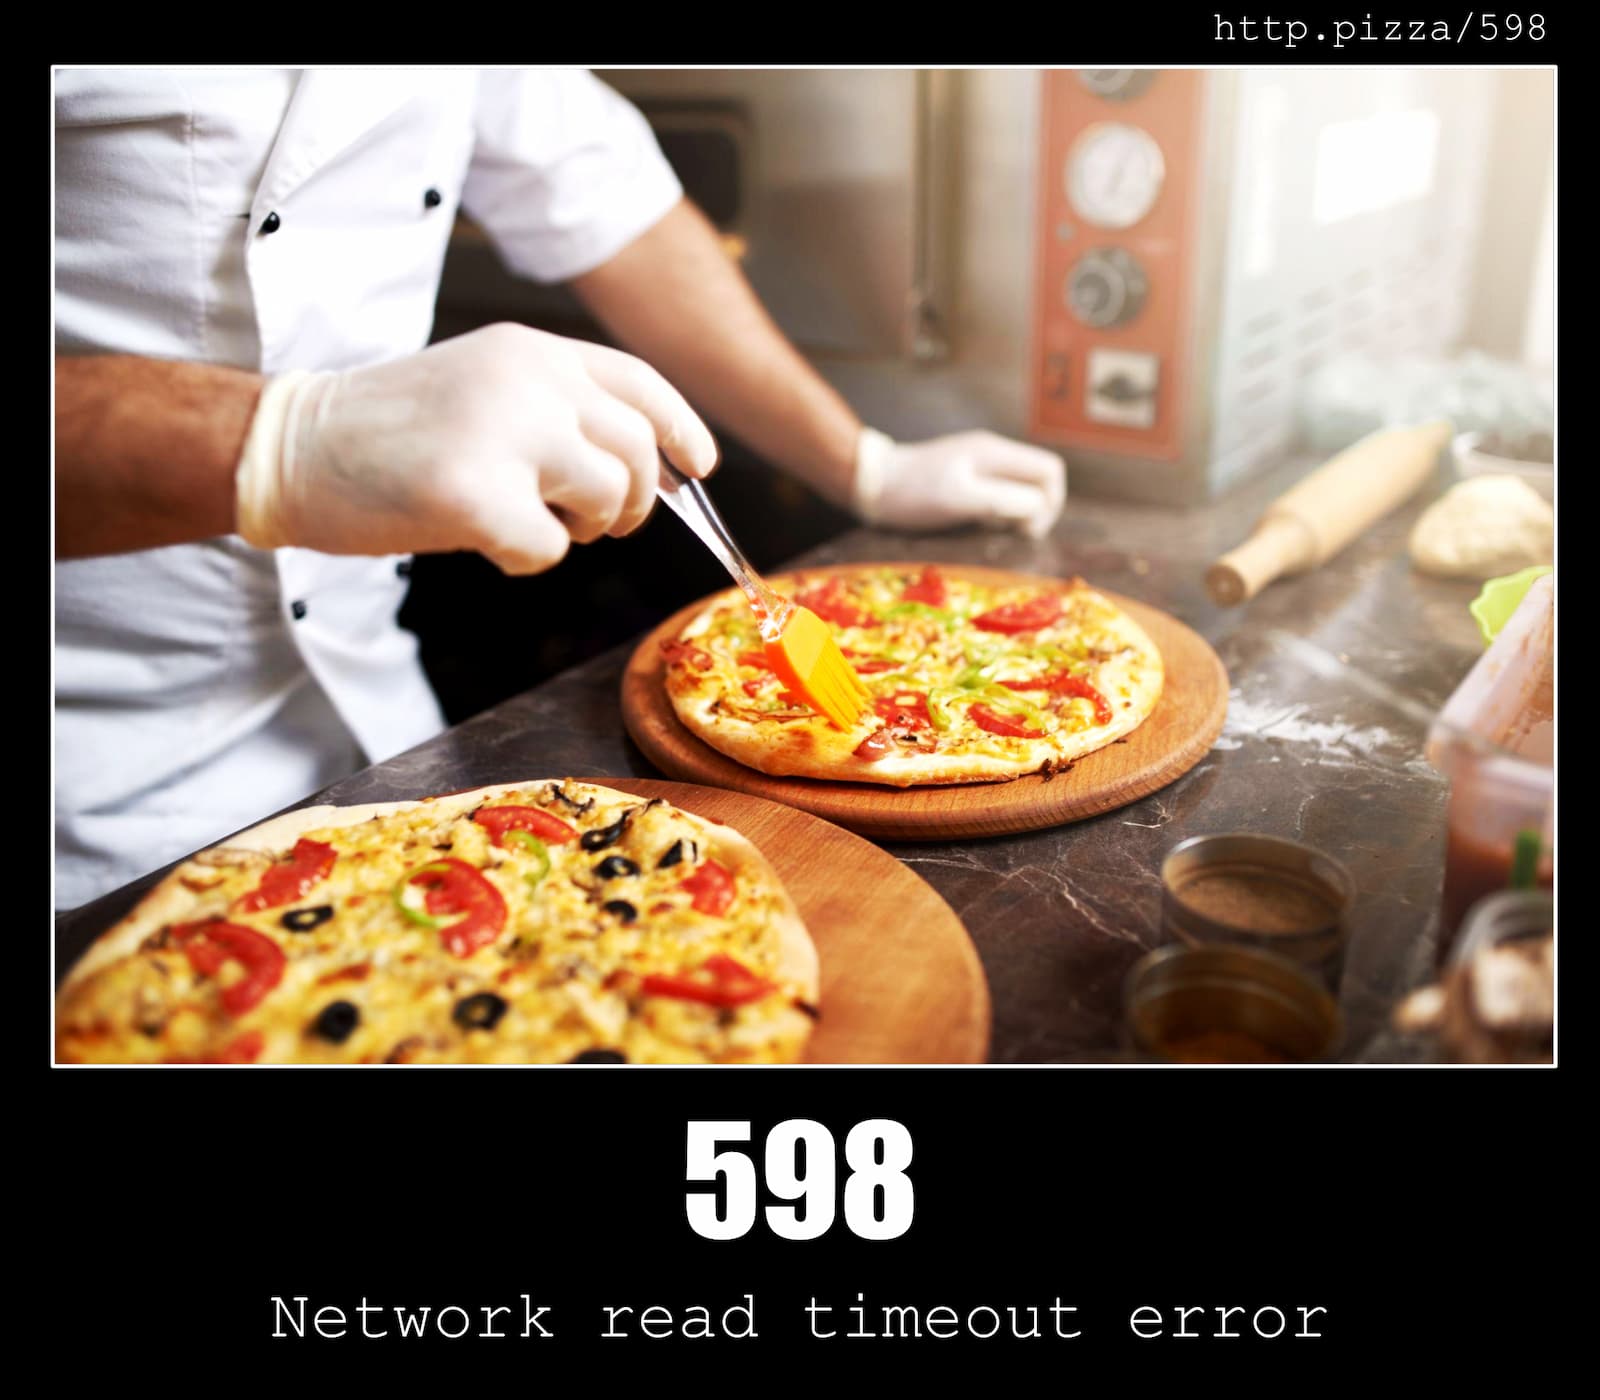 HTTP Status Code 598 Network read timeout error & Pizzas